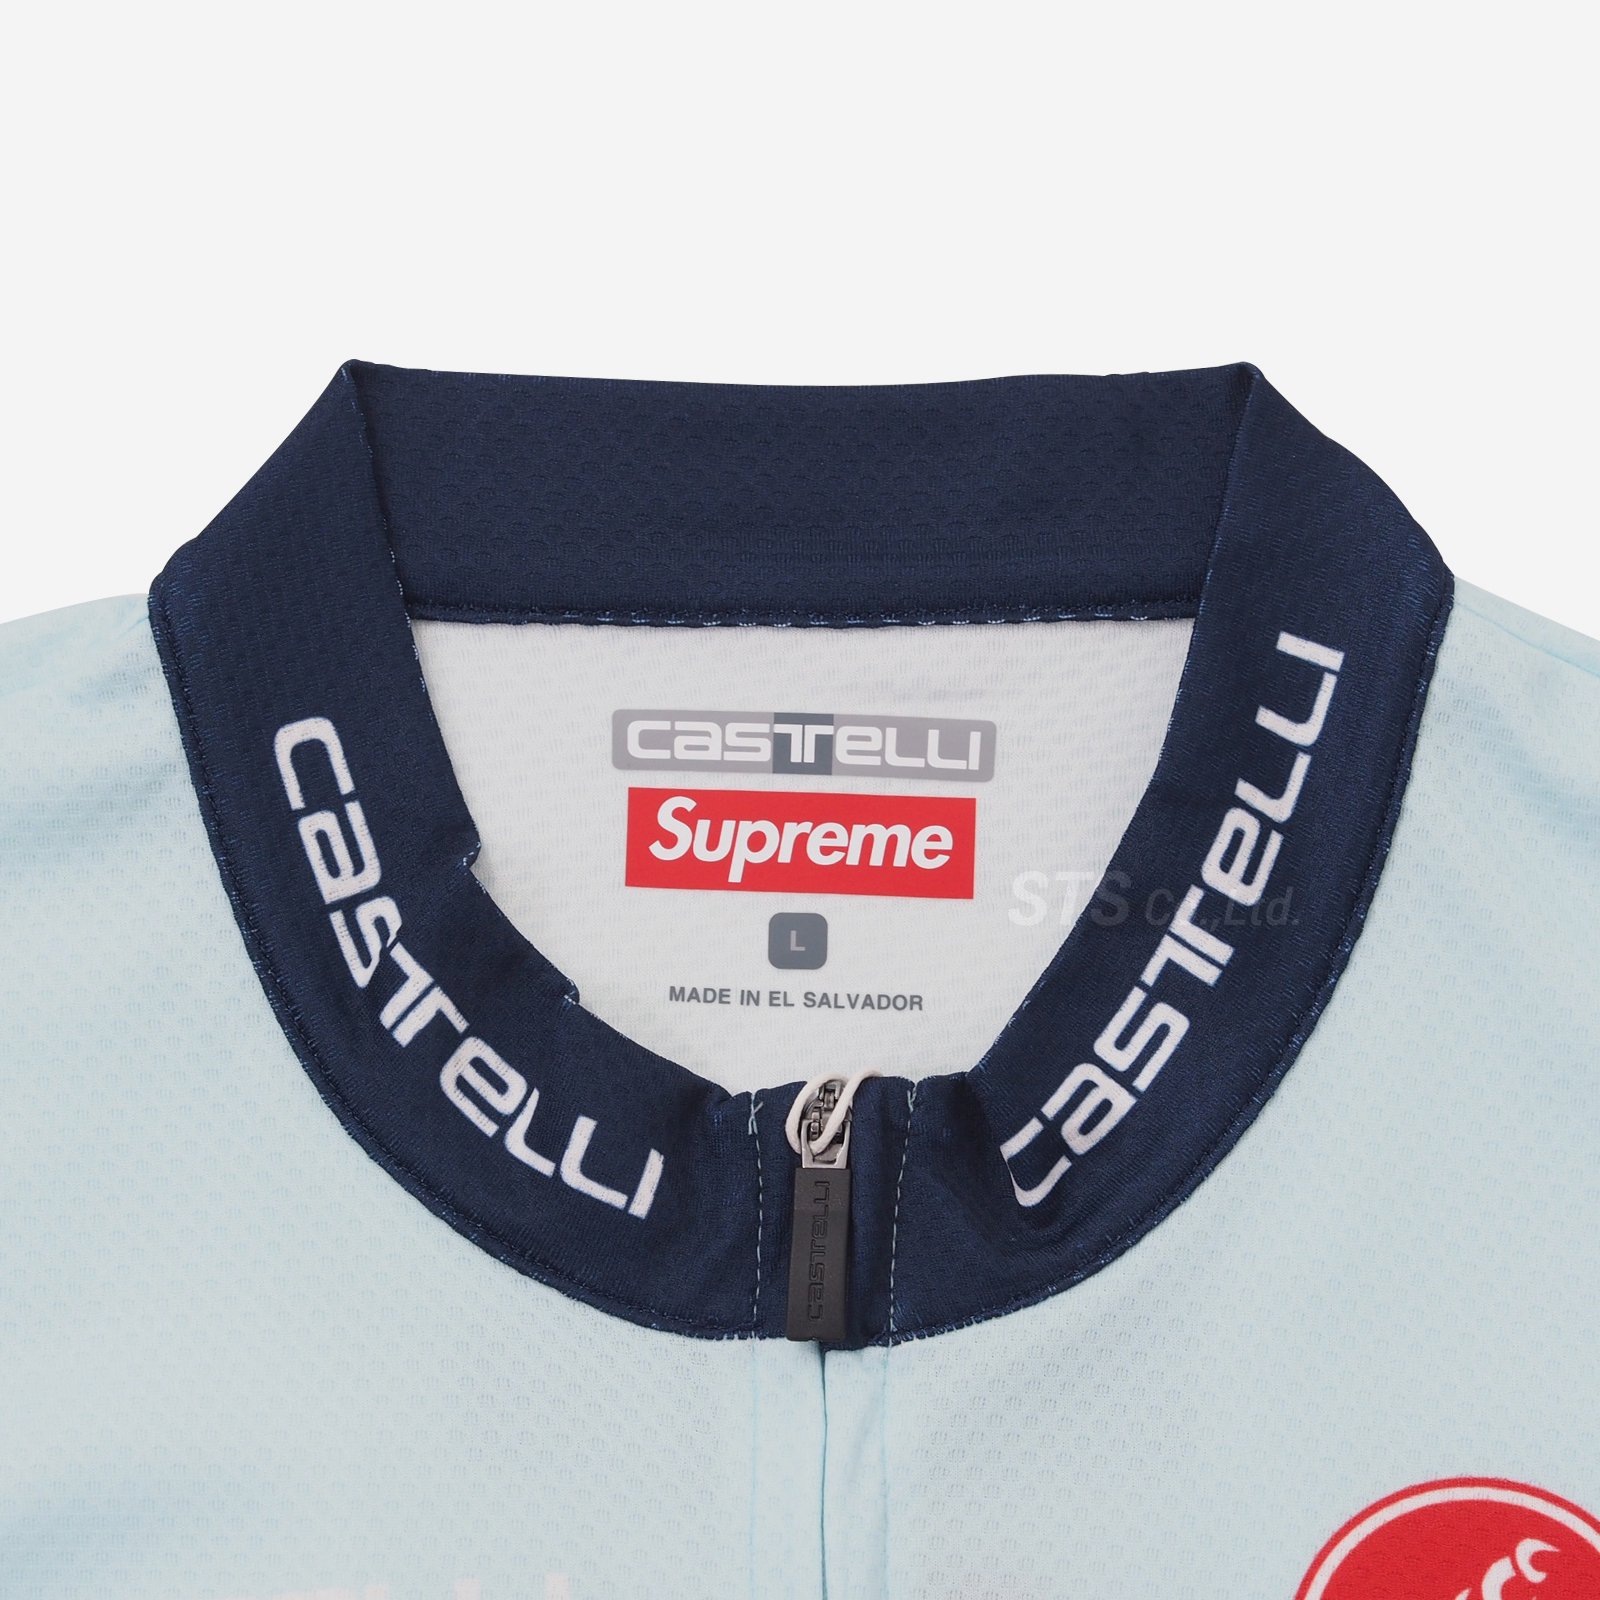 Supreme/Castelli Cycling Jersey - ParkSIDER